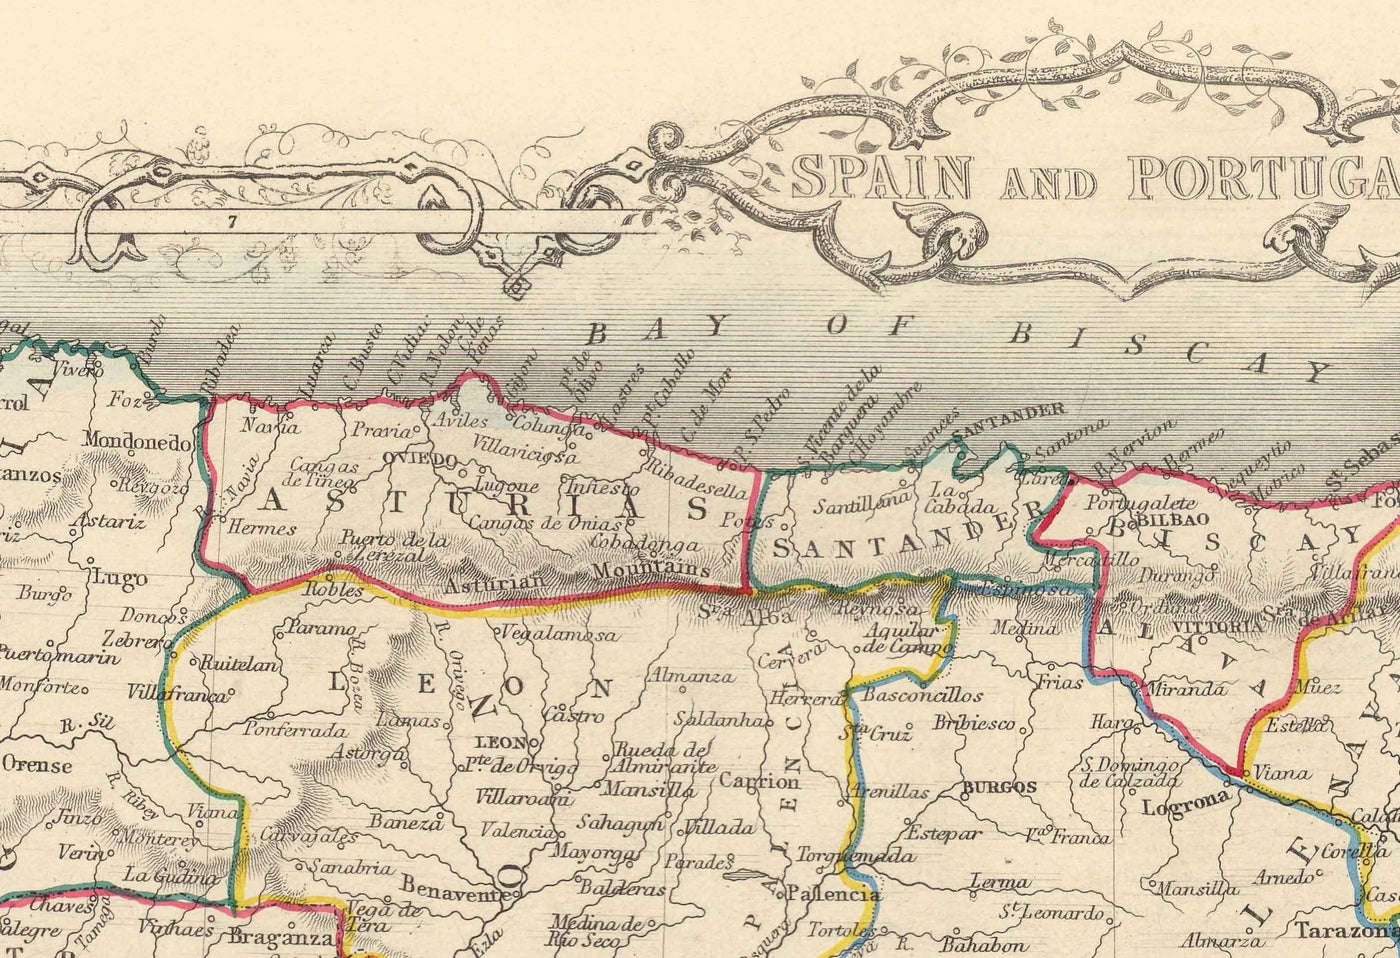 Old Map of Spain & Portugal, 1851 - Illustrations victoriennes - Catalogne, Madrid, Lisbonne, Gibraltar, Andalousie